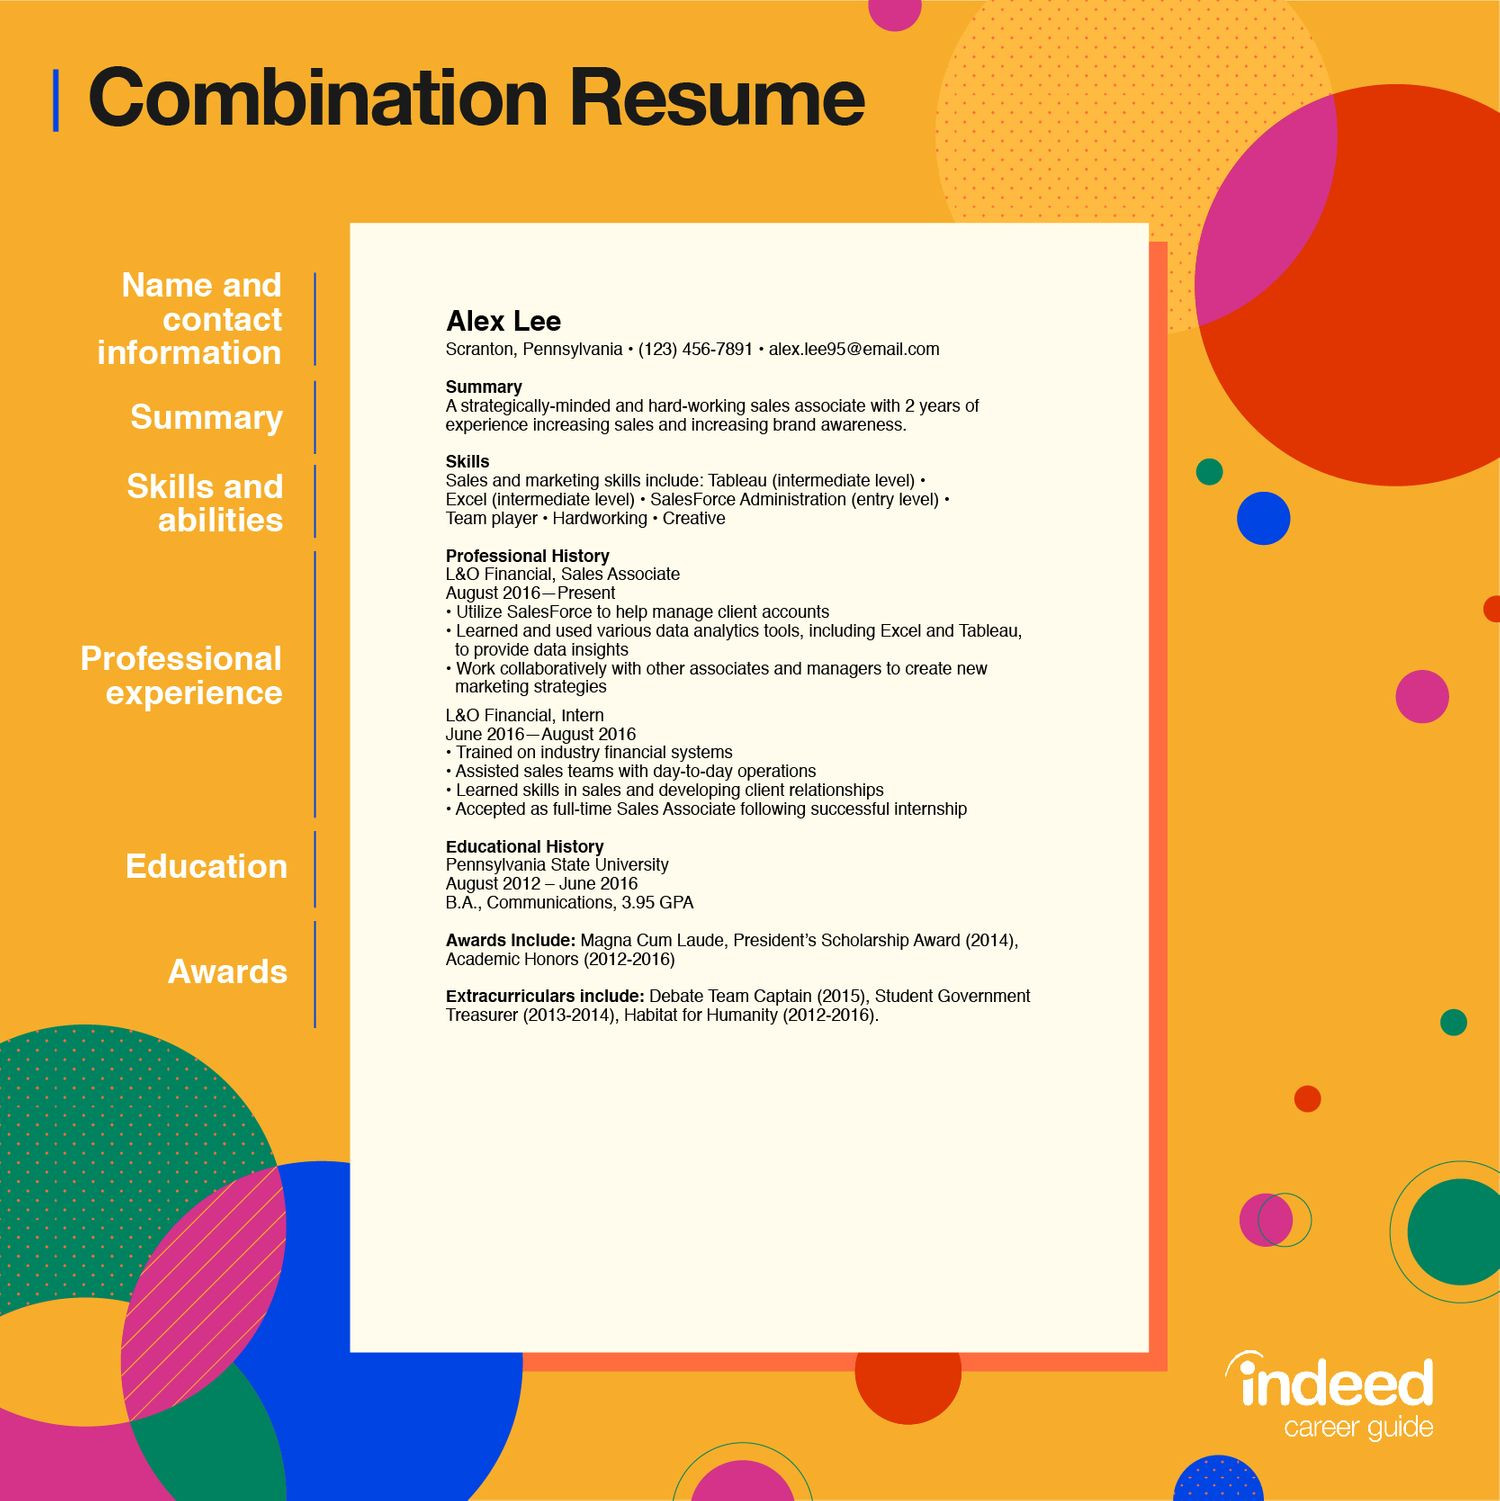 Combination Resume Sample for Career Change Combination Resume Tips and Examples Indeed.com